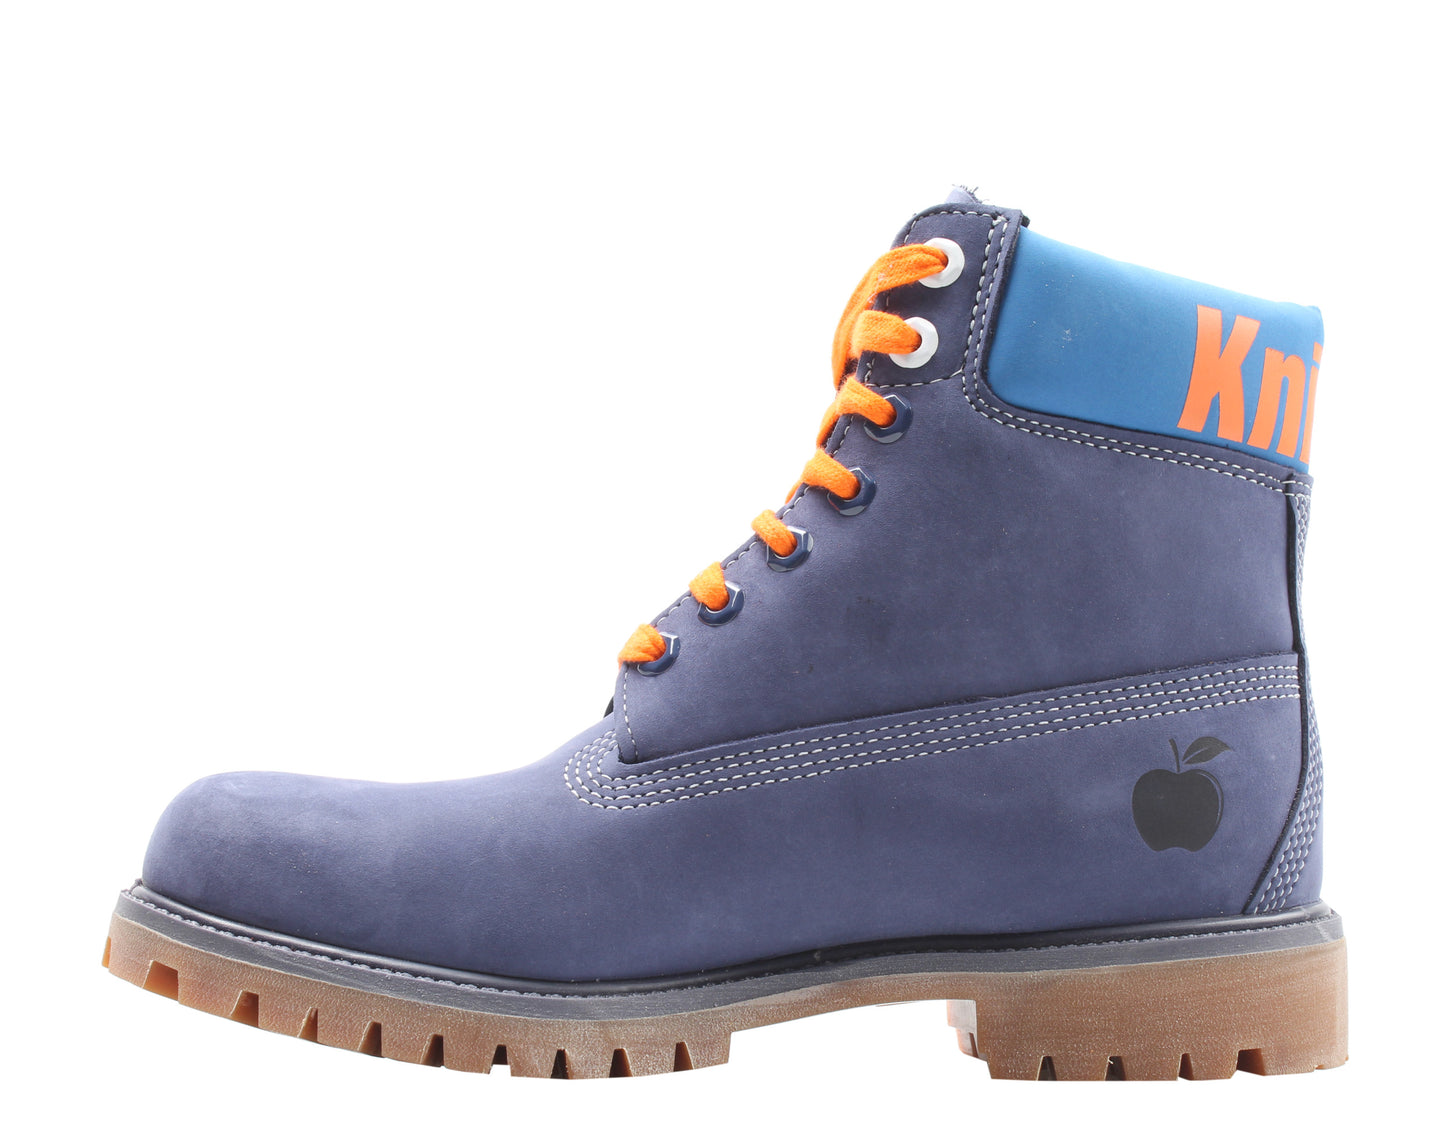 Timberland X Nba 6 Inch Knicks 0A2493E09 blue boots